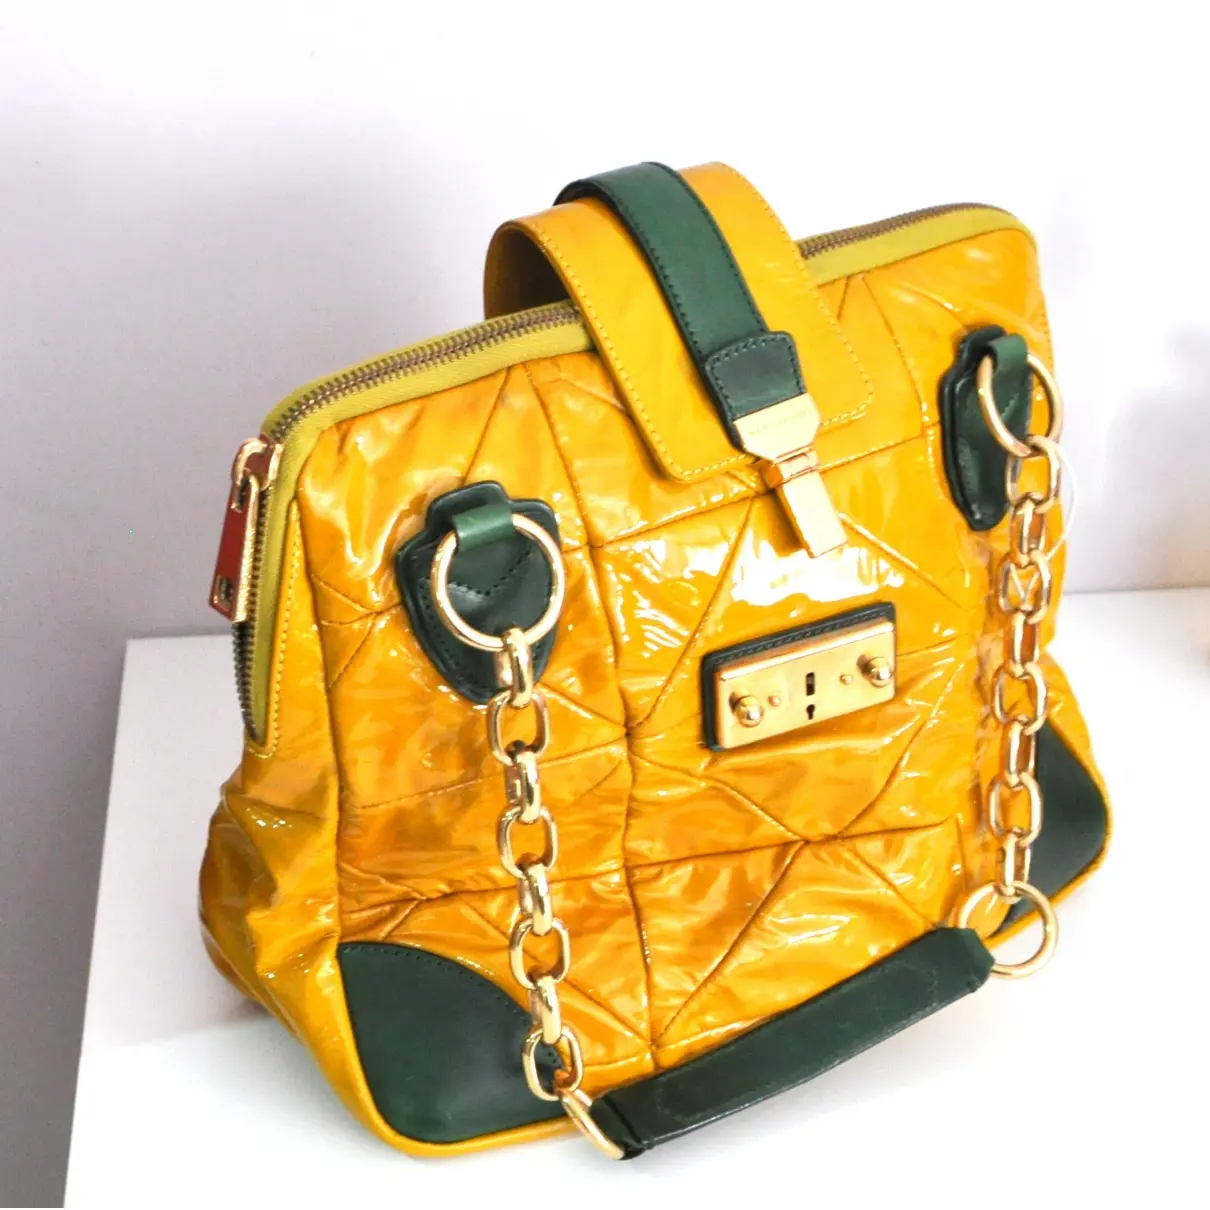 Patent leather handbag Marc Jacobs